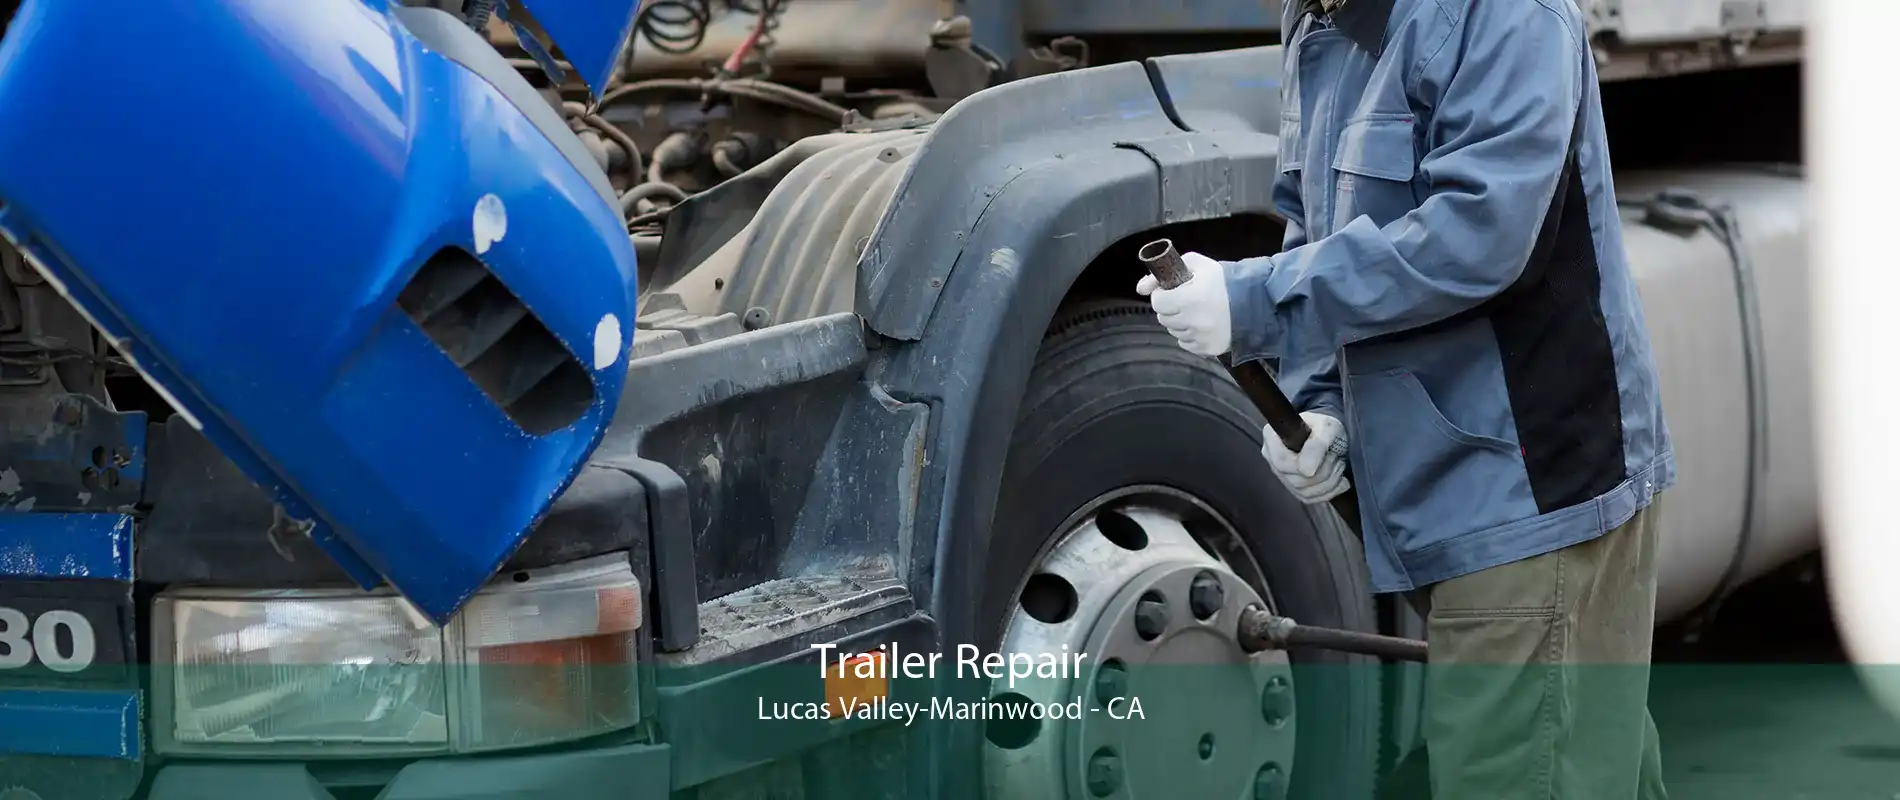 Trailer Repair Lucas Valley-Marinwood - CA